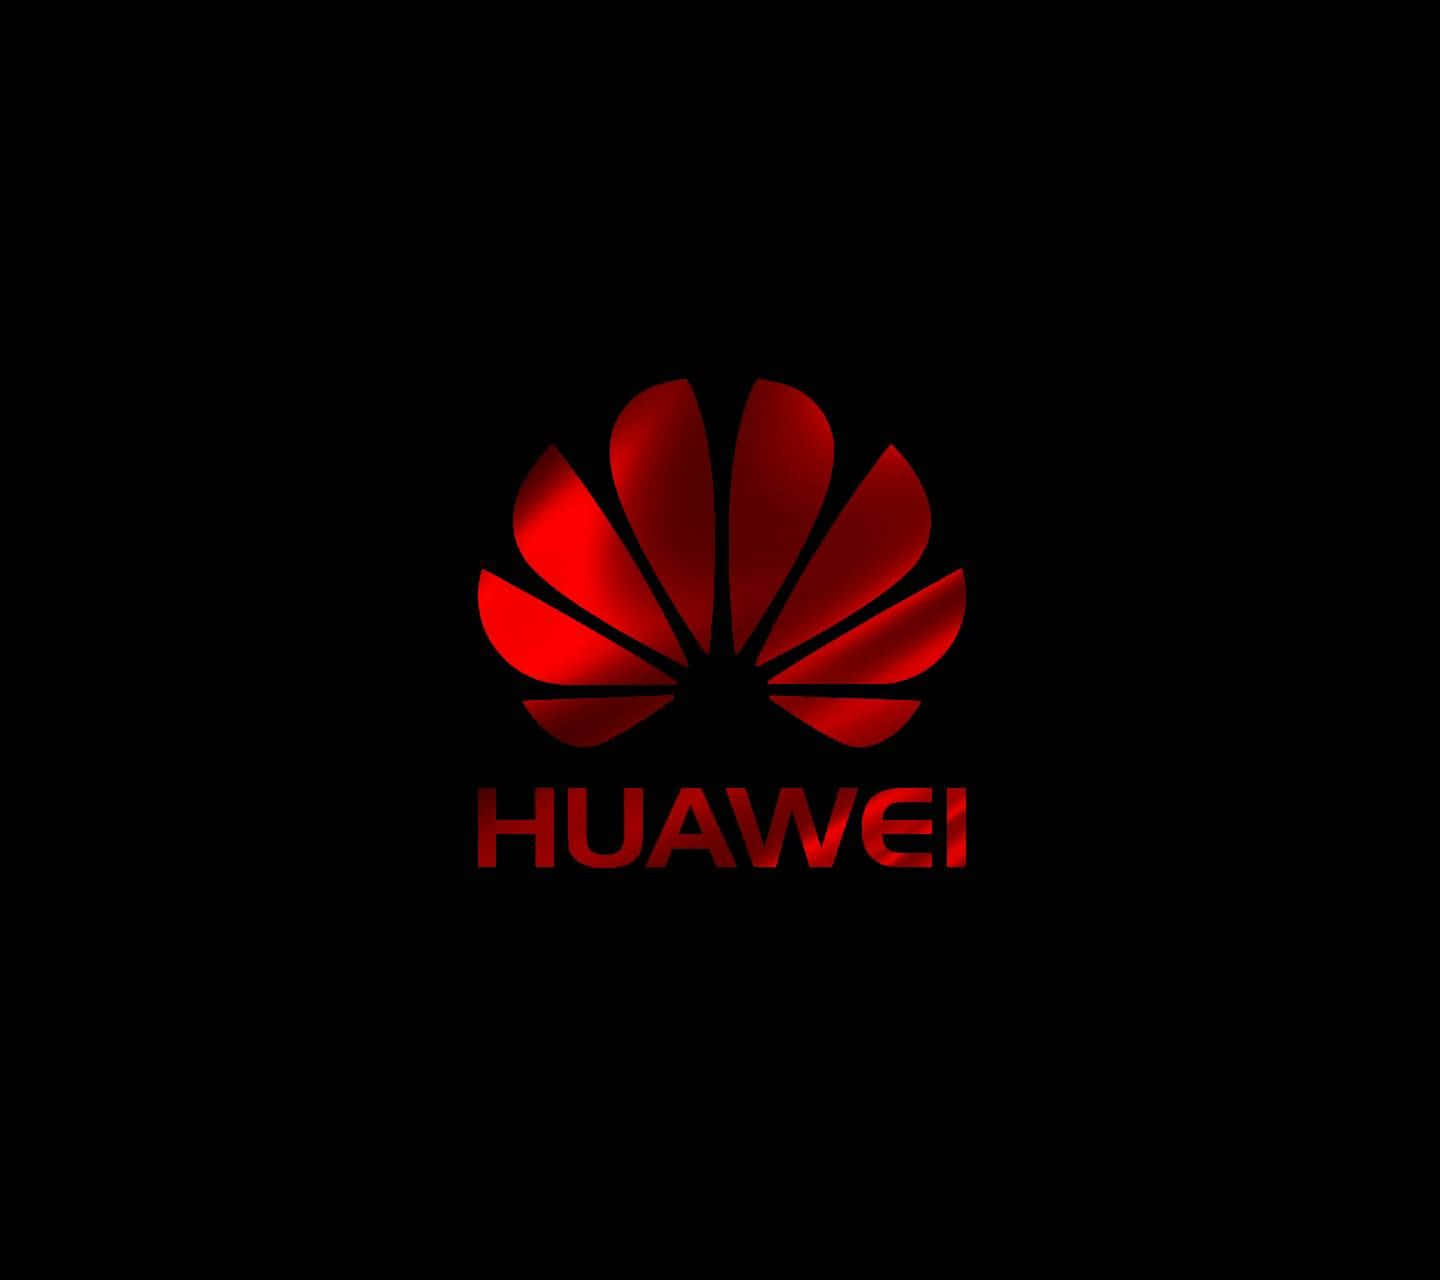 Huawei Logo On A Black Background